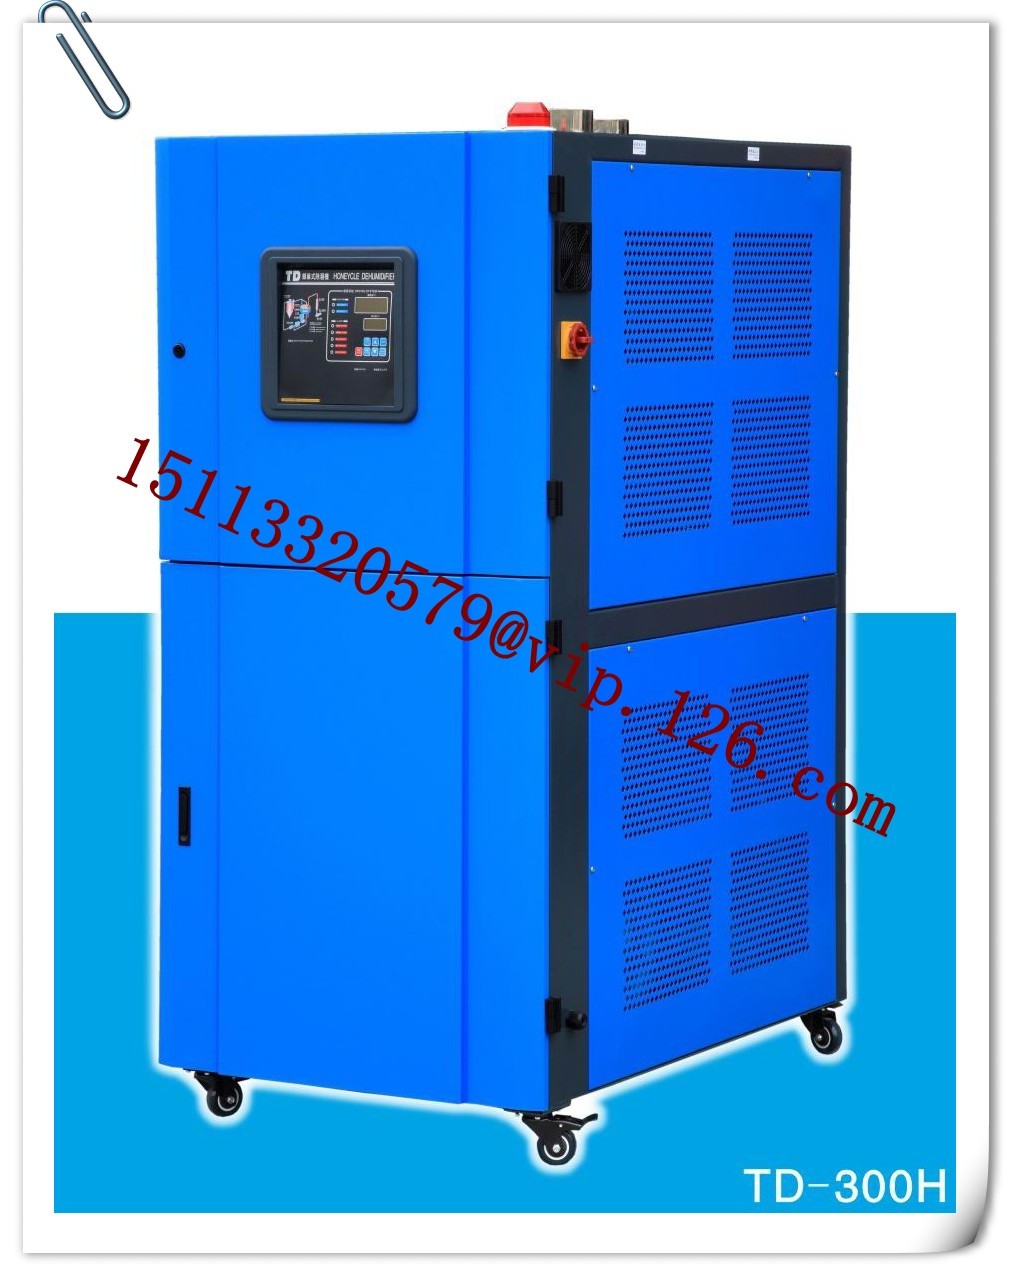 Honeycomb Rotor Plastic Dehumidifying Dryer for Injection Machine/Plastic Drying Machine